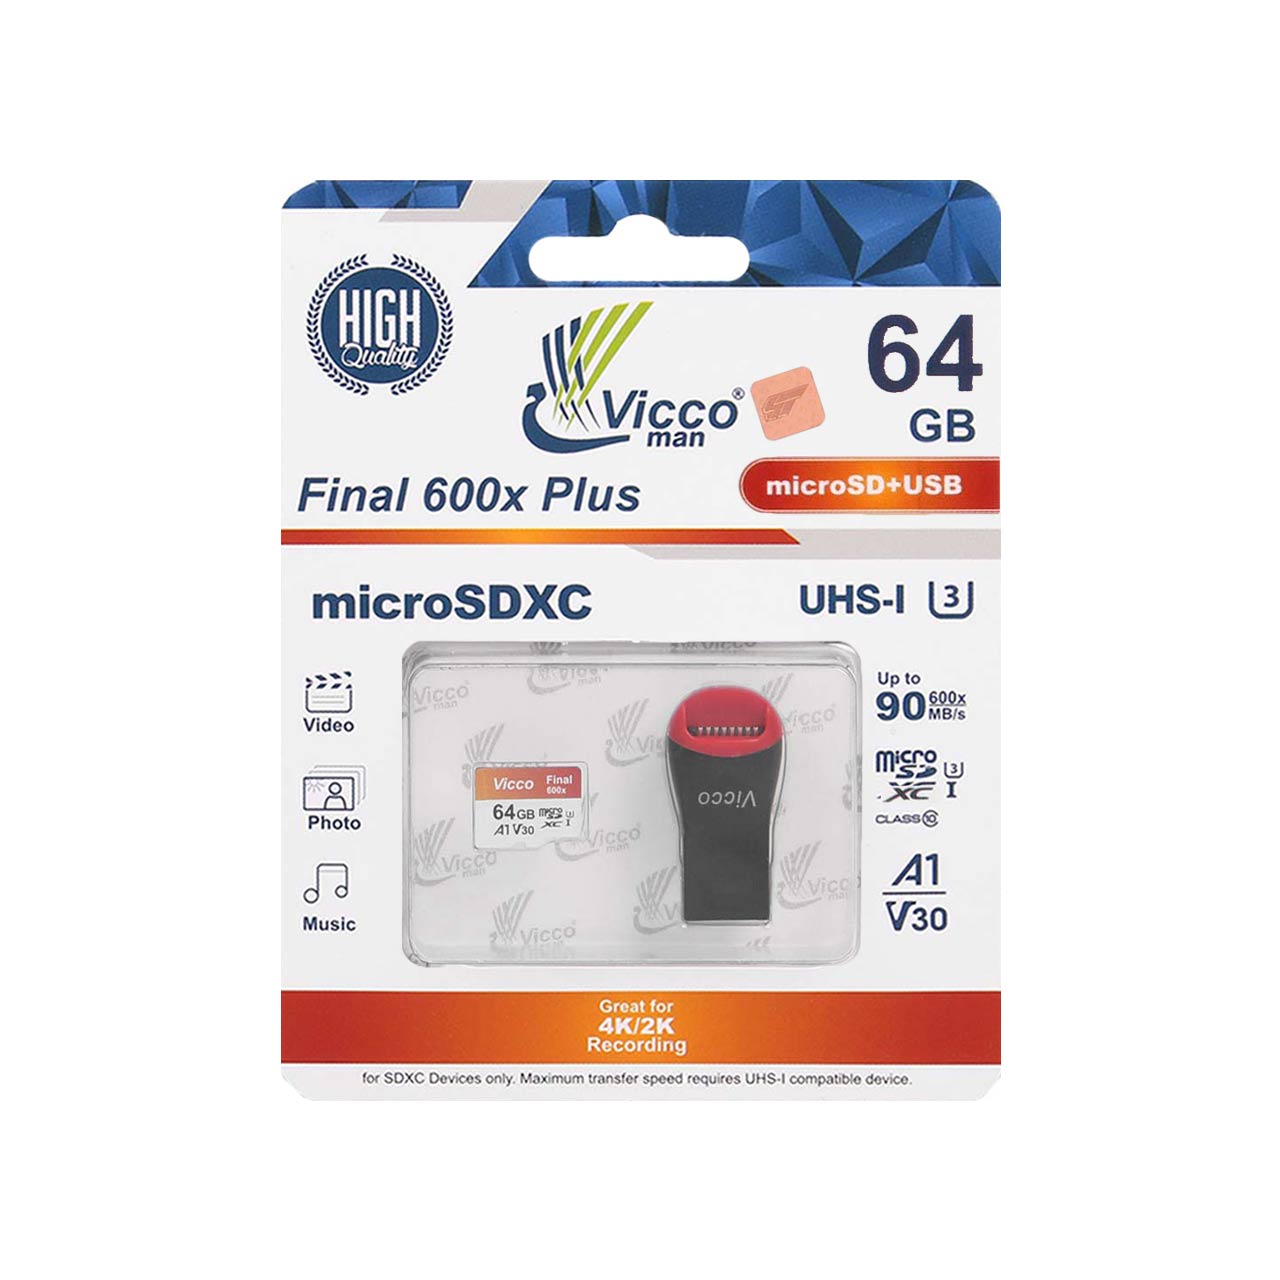 ViccoMan microSDXC Final 600X Plus V30 UHS-I U3-64GB